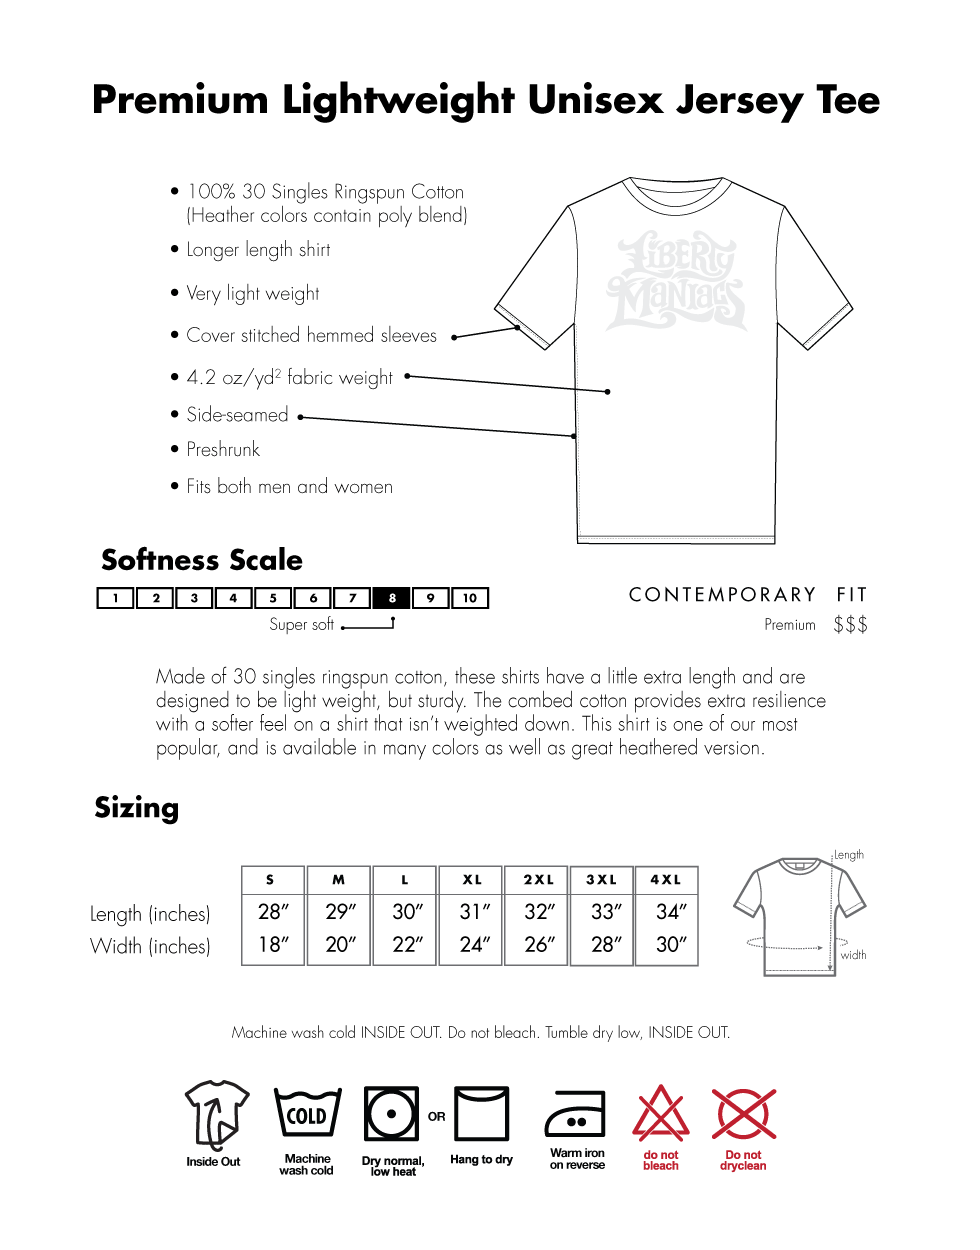 Freedom or Death Short-Sleeve Unisex T-Shirt